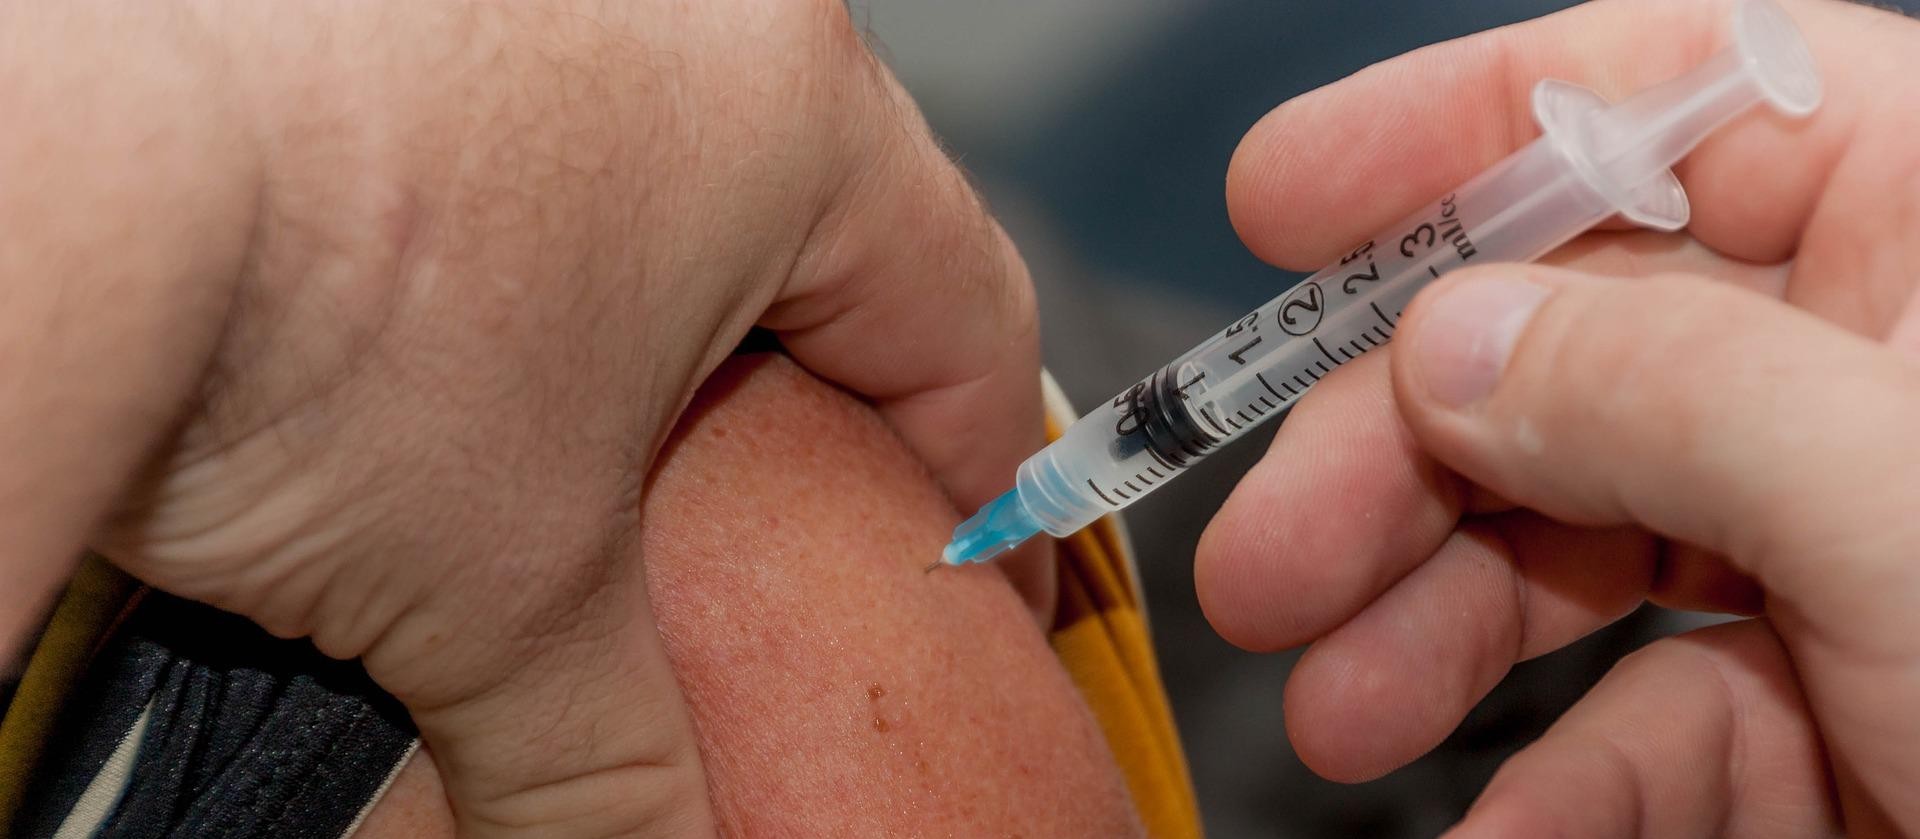 Cascavel libera a 4ª da vacina contra Covid-19